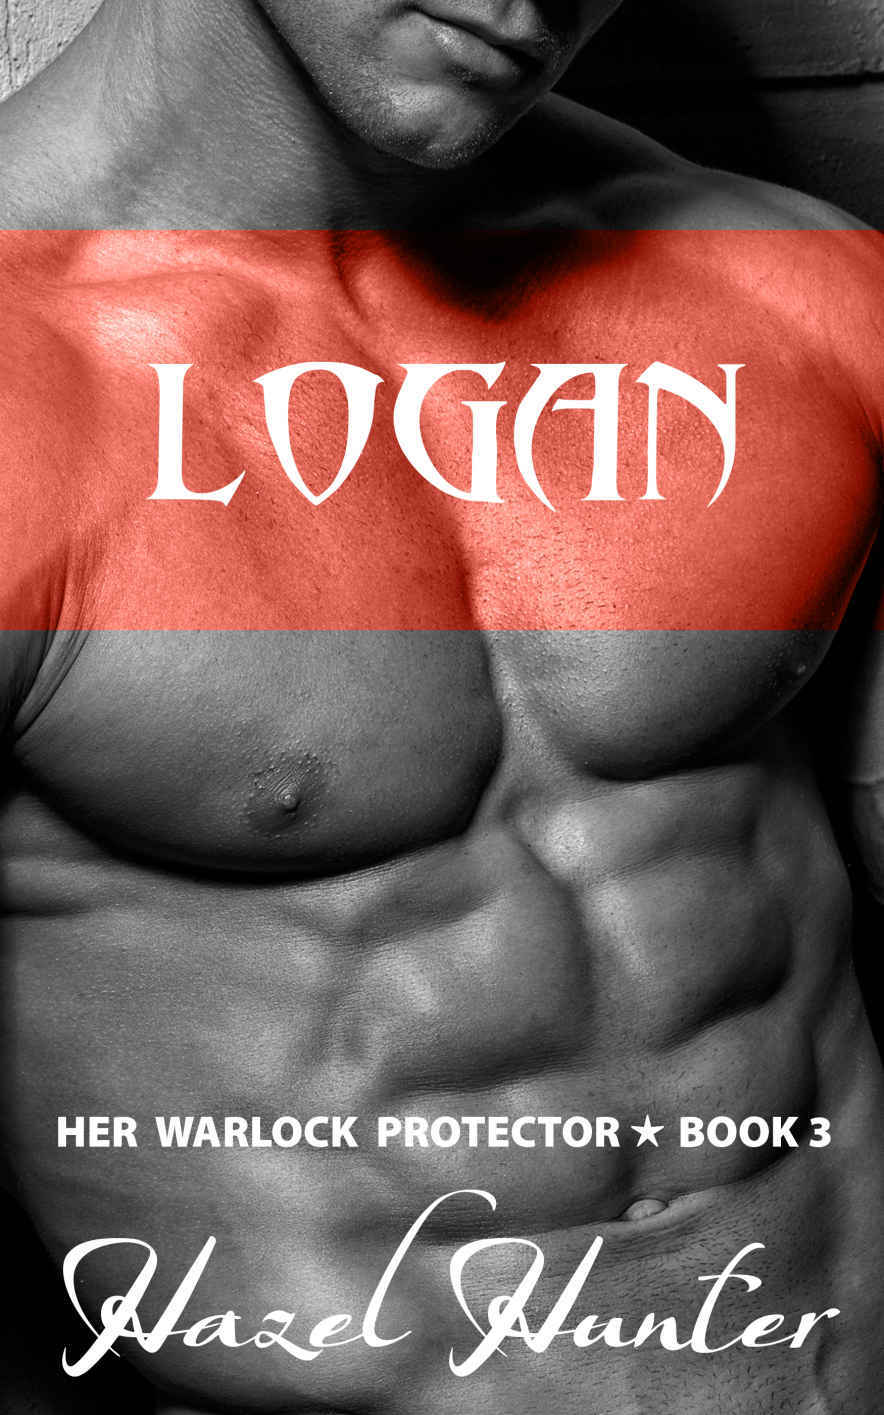 Logan: Her Warlock Protector Book 3